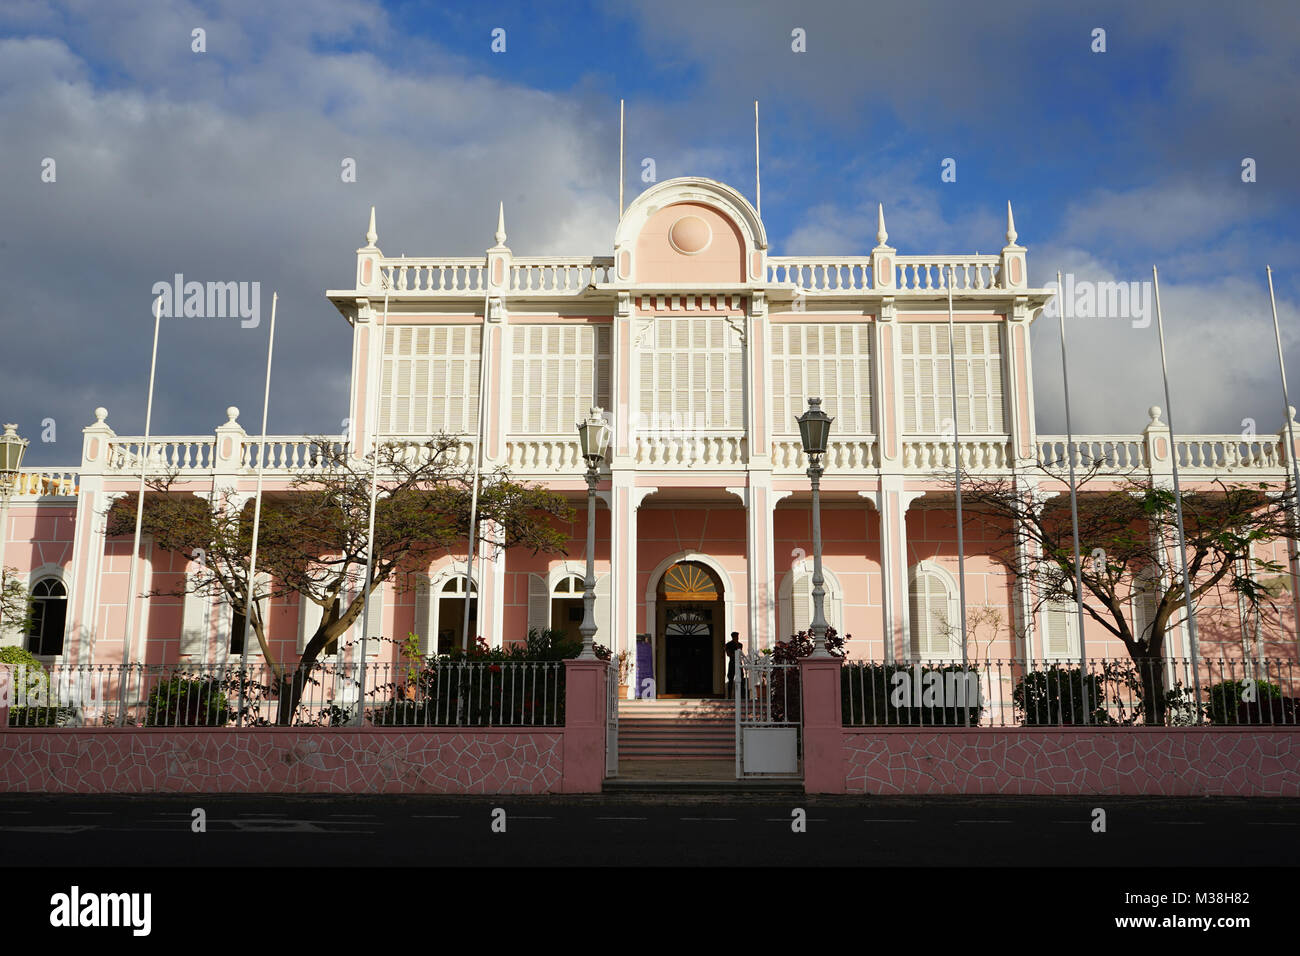 Palácio do Povo, Palácio do Mindelo, Former Governor's Palace in Mindelo, Island Sao Vicente, Cape Verde Stock Photo